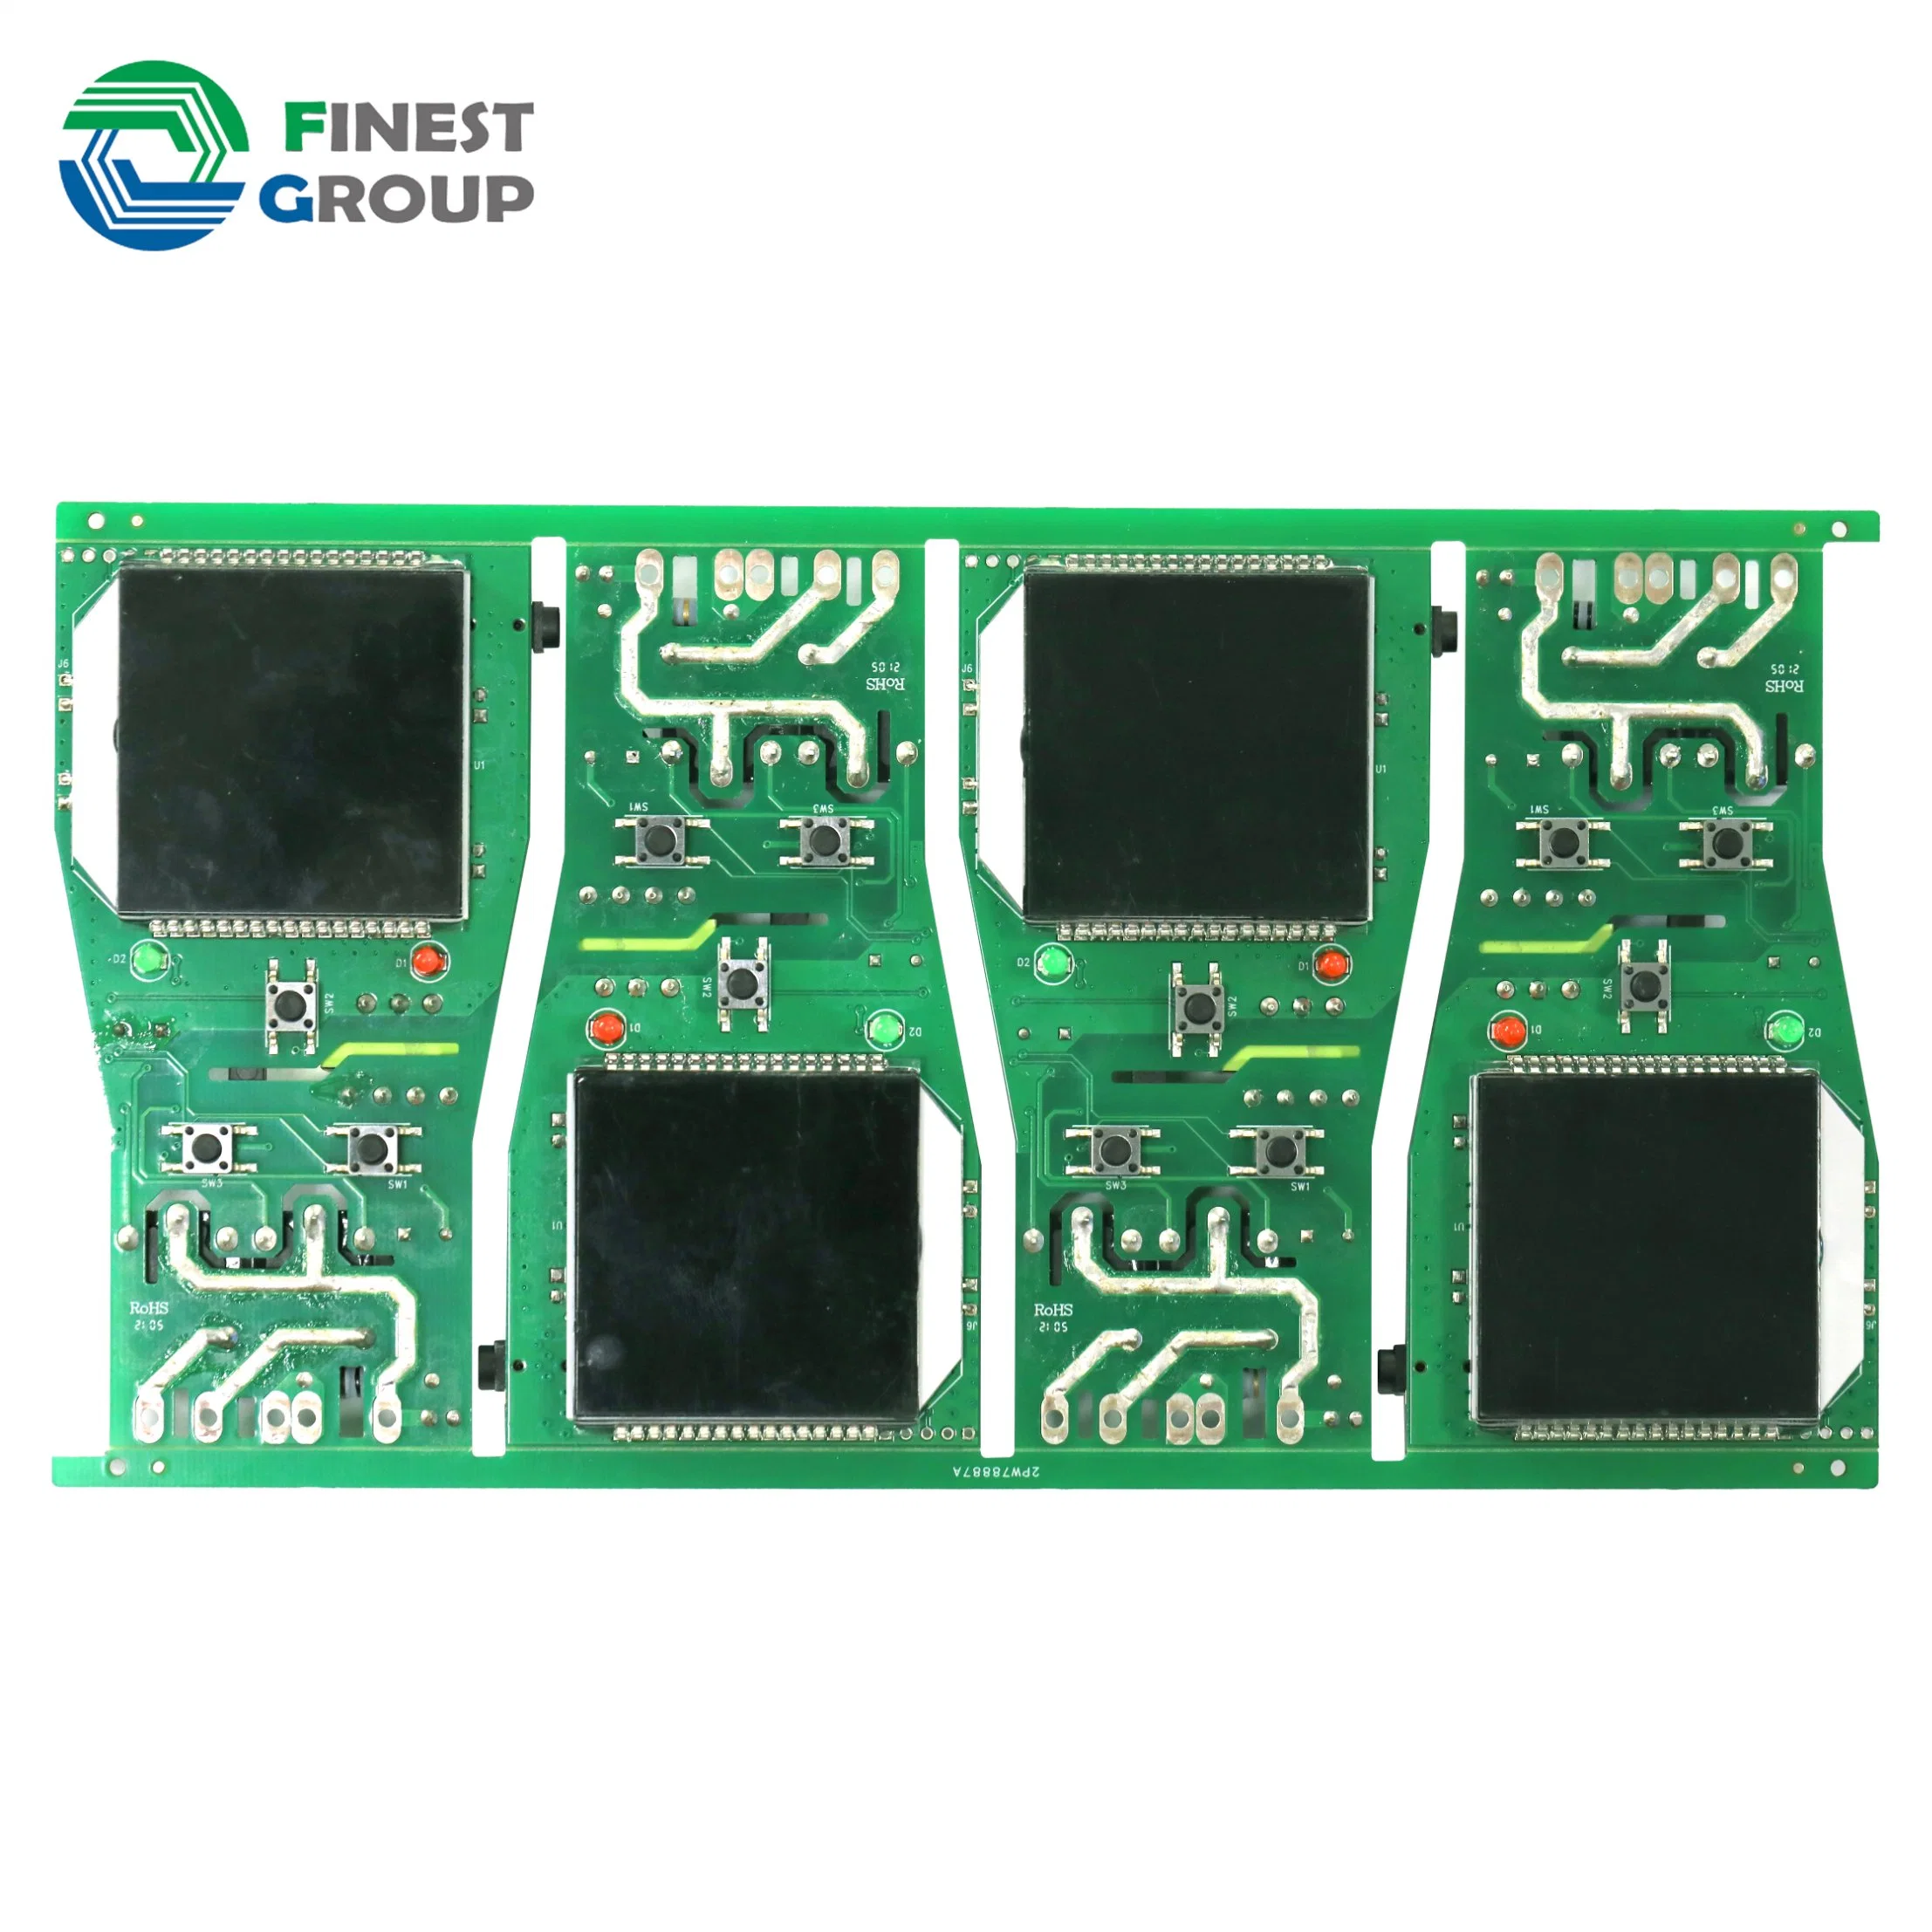 VAPE batería Cargador placa de circuito USB 4 conmutadores Cargador solar Placa PCB de 8 capas conforme a la norma 94V0 RoHS